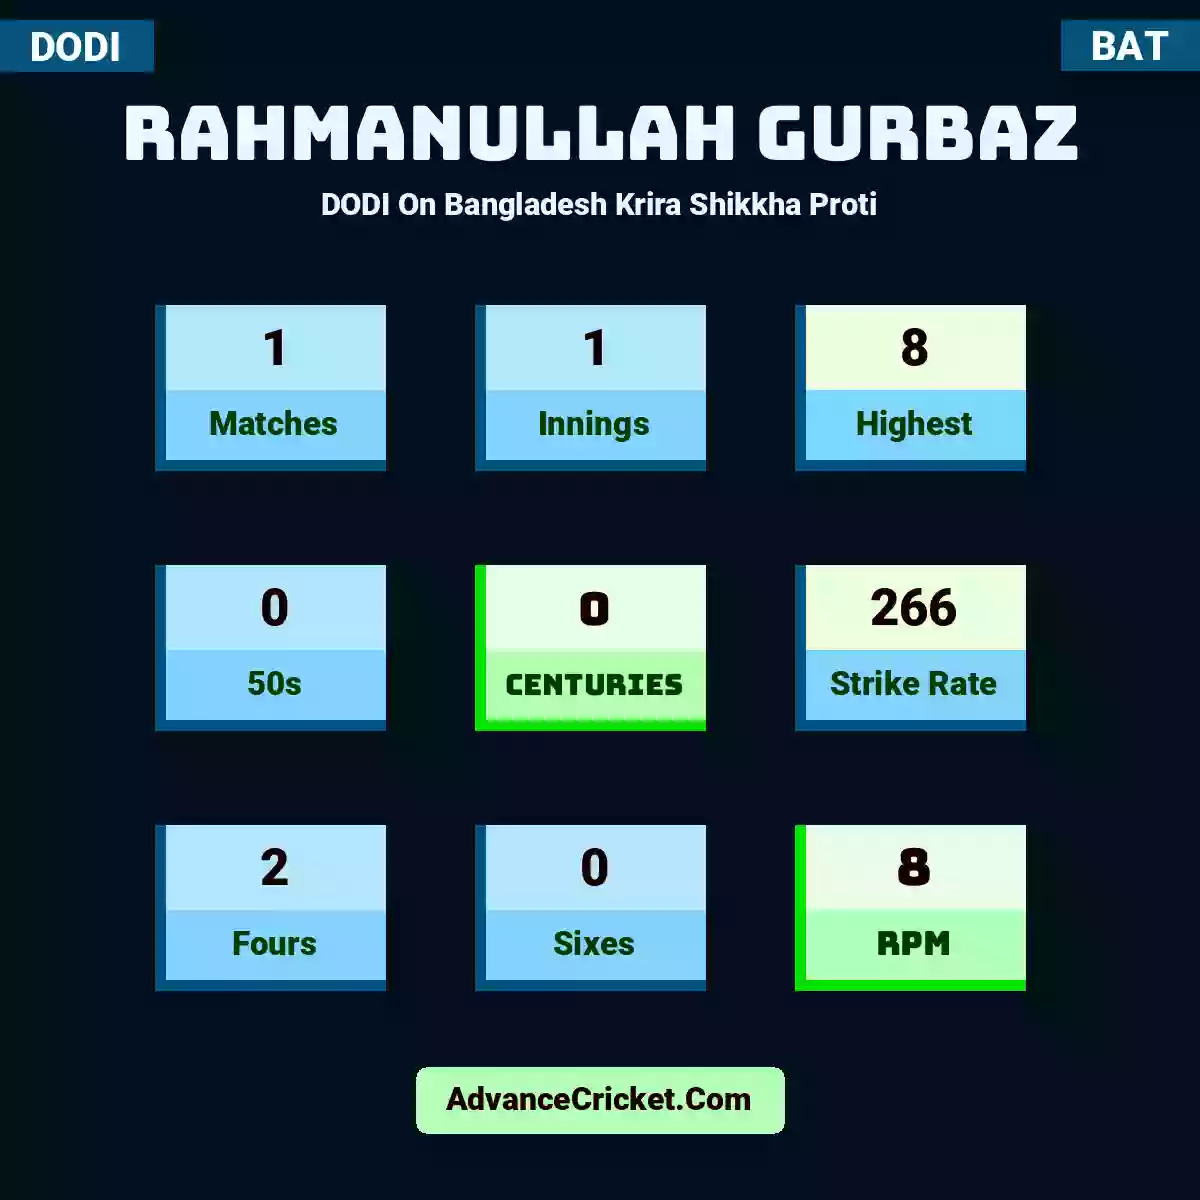 Rahmanullah Gurbaz DODI  On Bangladesh Krira Shikkha Proti, Rahmanullah Gurbaz played 1 matches, scored 8 runs as highest, 0 half-centuries, and 0 centuries, with a strike rate of 266. R.Gurbaz hit 2 fours and 0 sixes, with an RPM of 8.